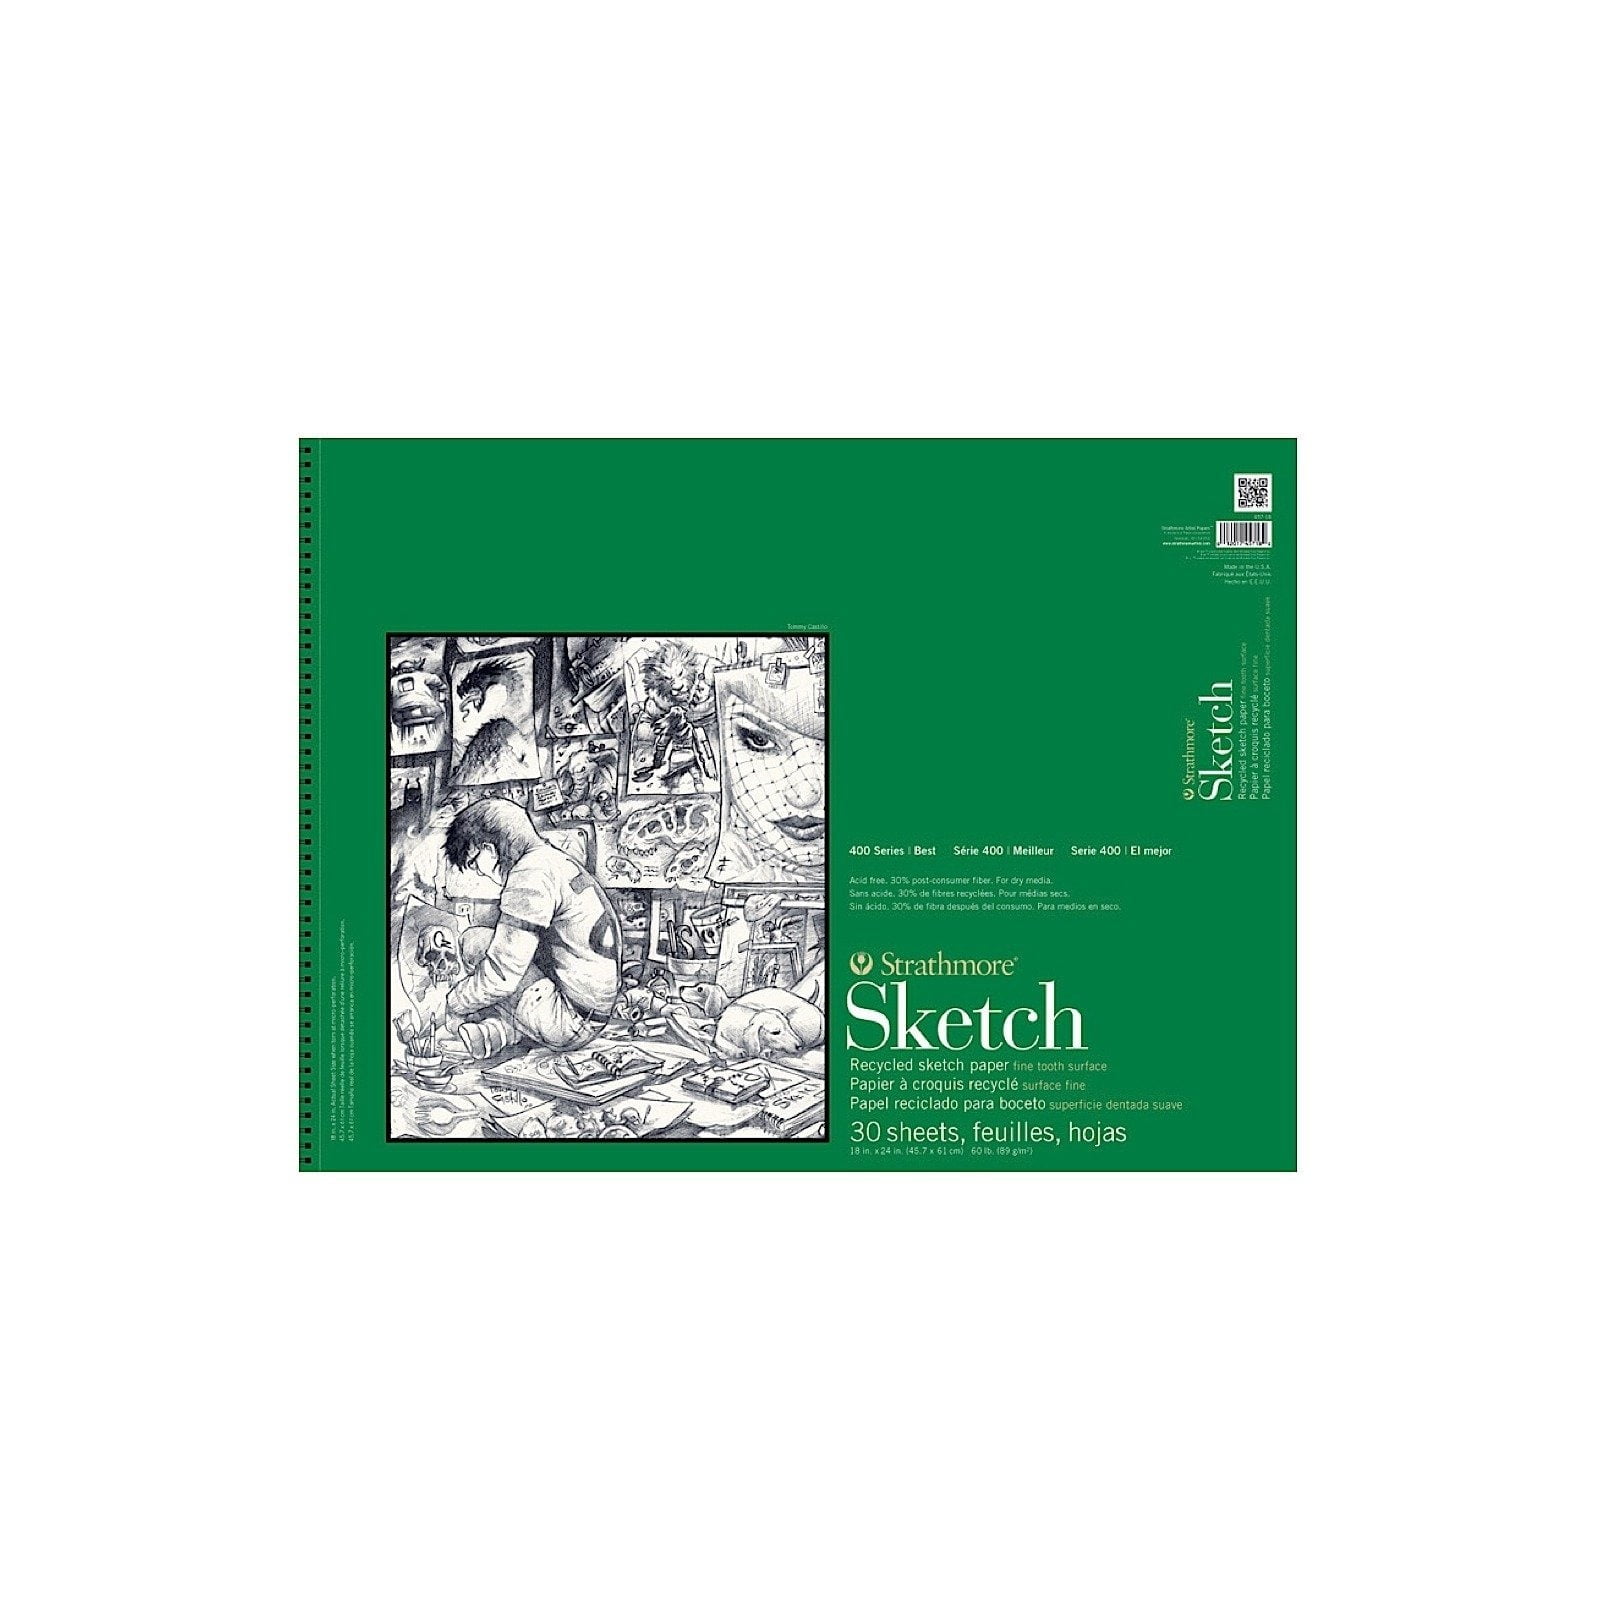 Strathmore 400 Series 9 x 12 Sketch Pad, 100 Sheets/Pad (455-3)